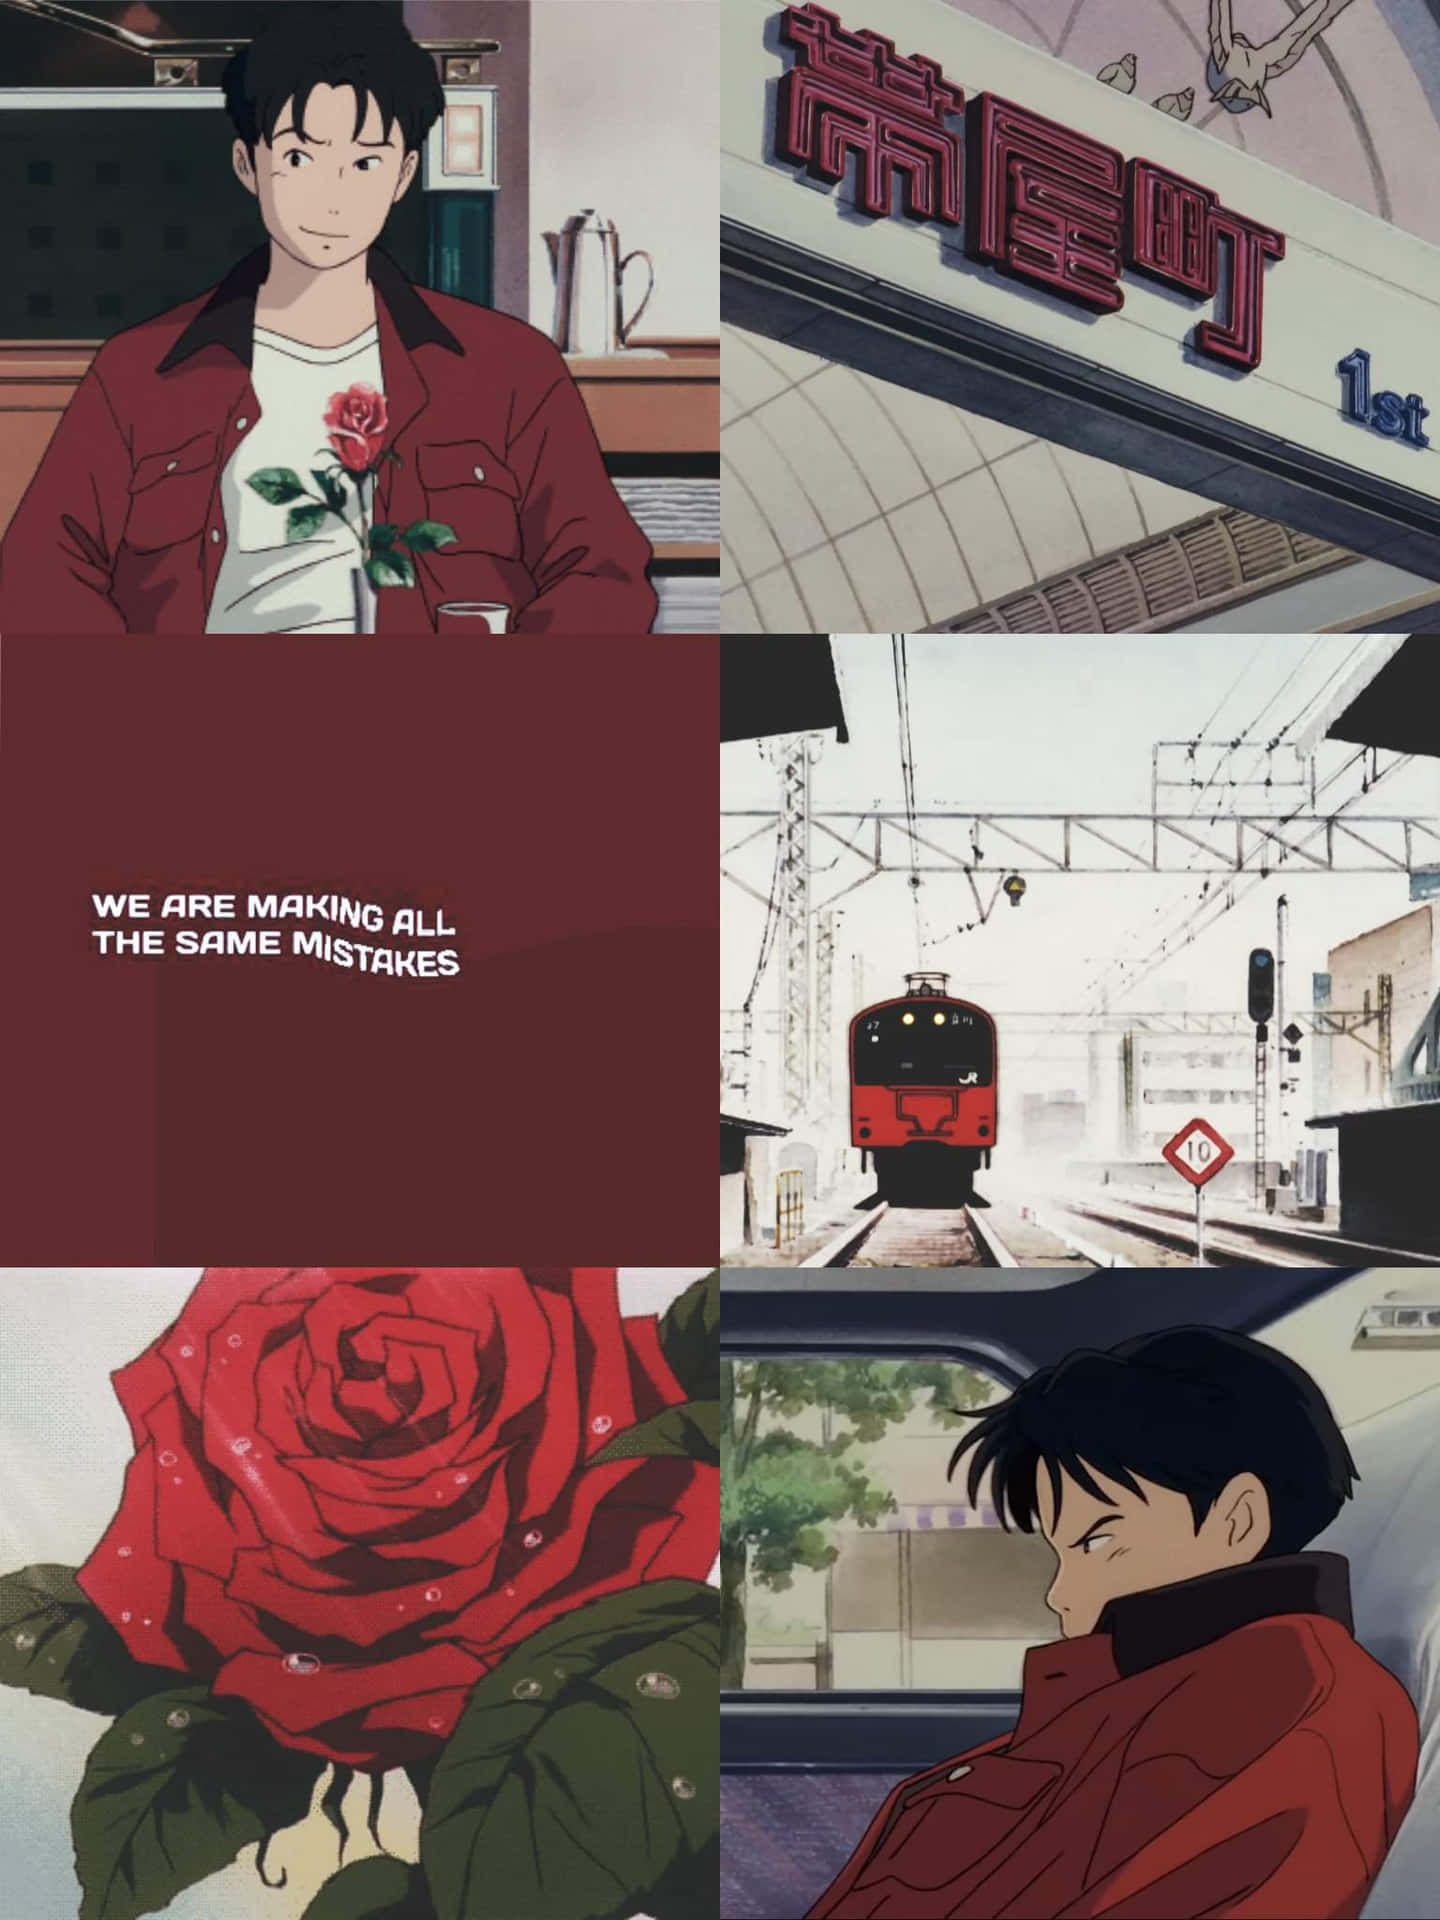 Studio Ghibli Inspired Collage Wallpaper